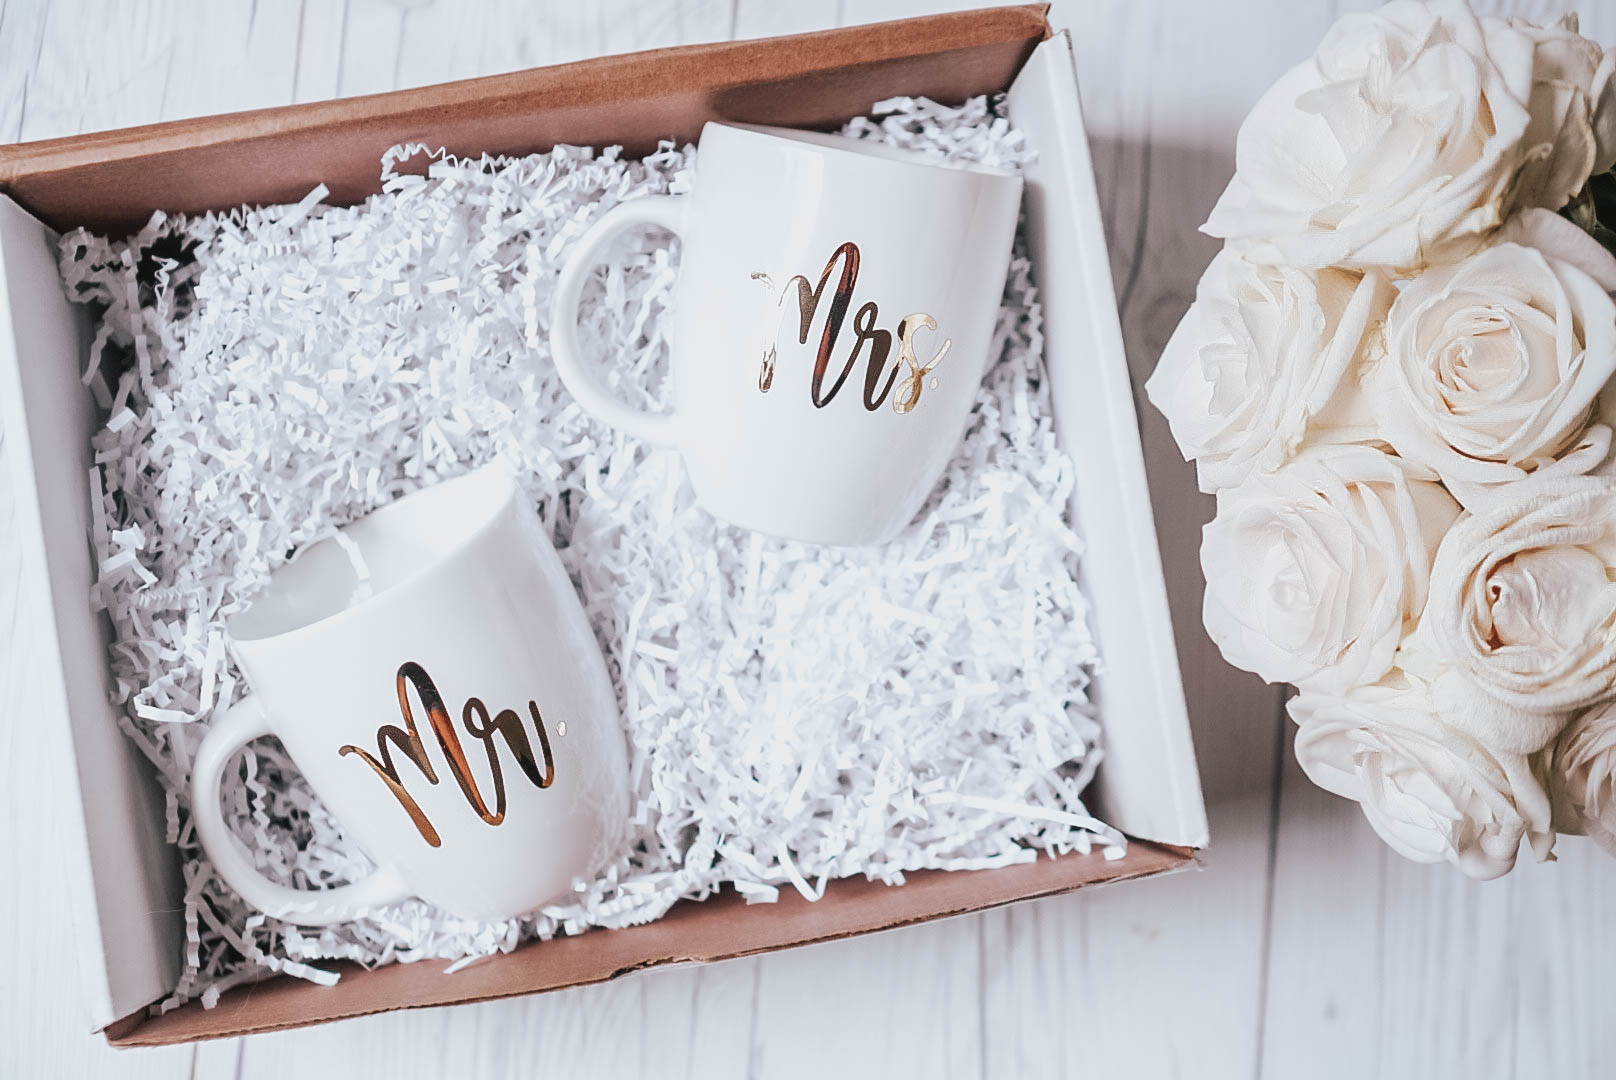 DIY Gift Idea– Bride and Groom Mugs With Chrome Adhesive Vinyl